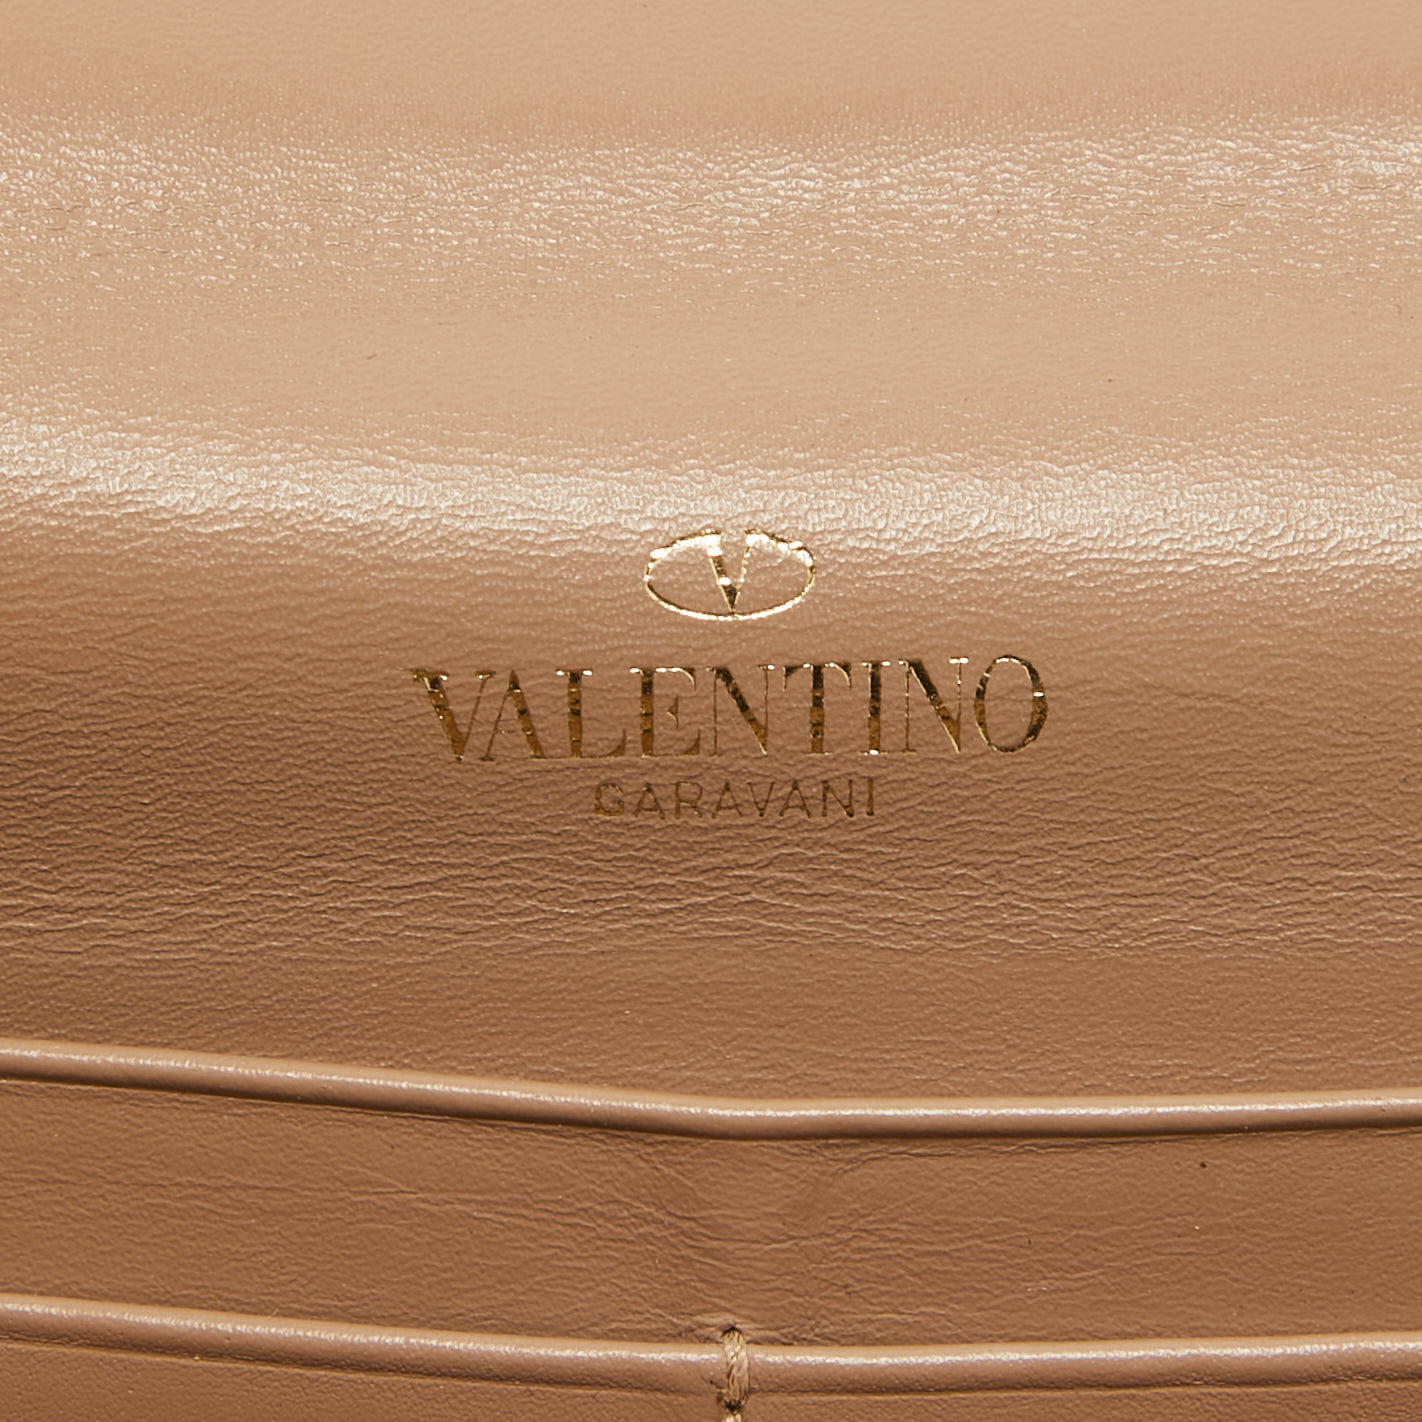 Valentino Beige Leather Rockstud Continental Wallet